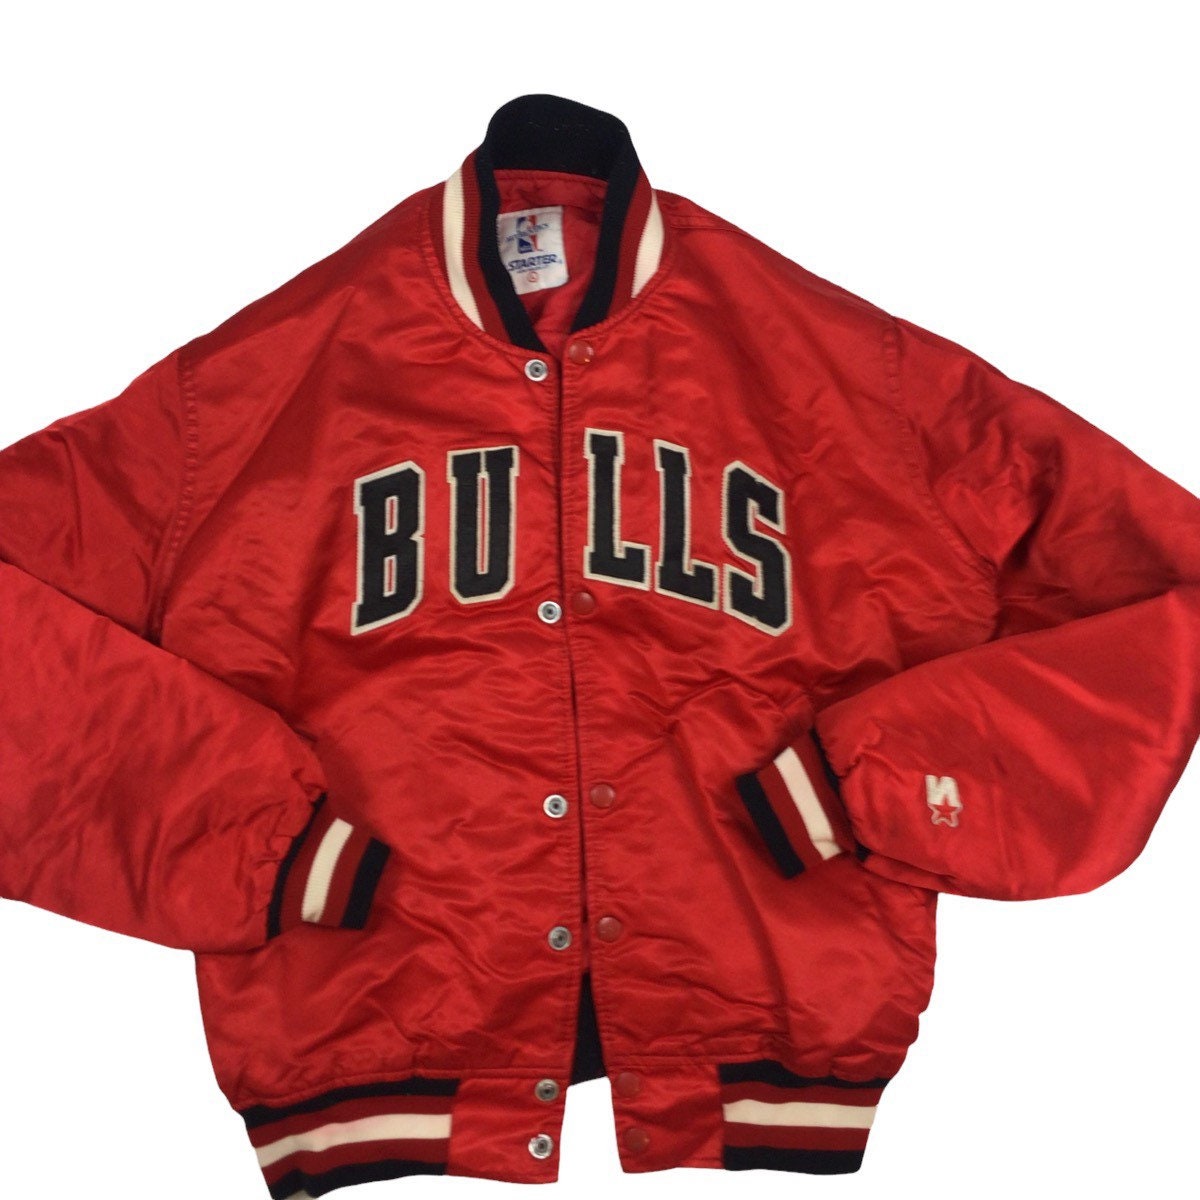 Chicago Bulls 1990's Pinstripe Starter Baseball Jersey - The Edit LDN